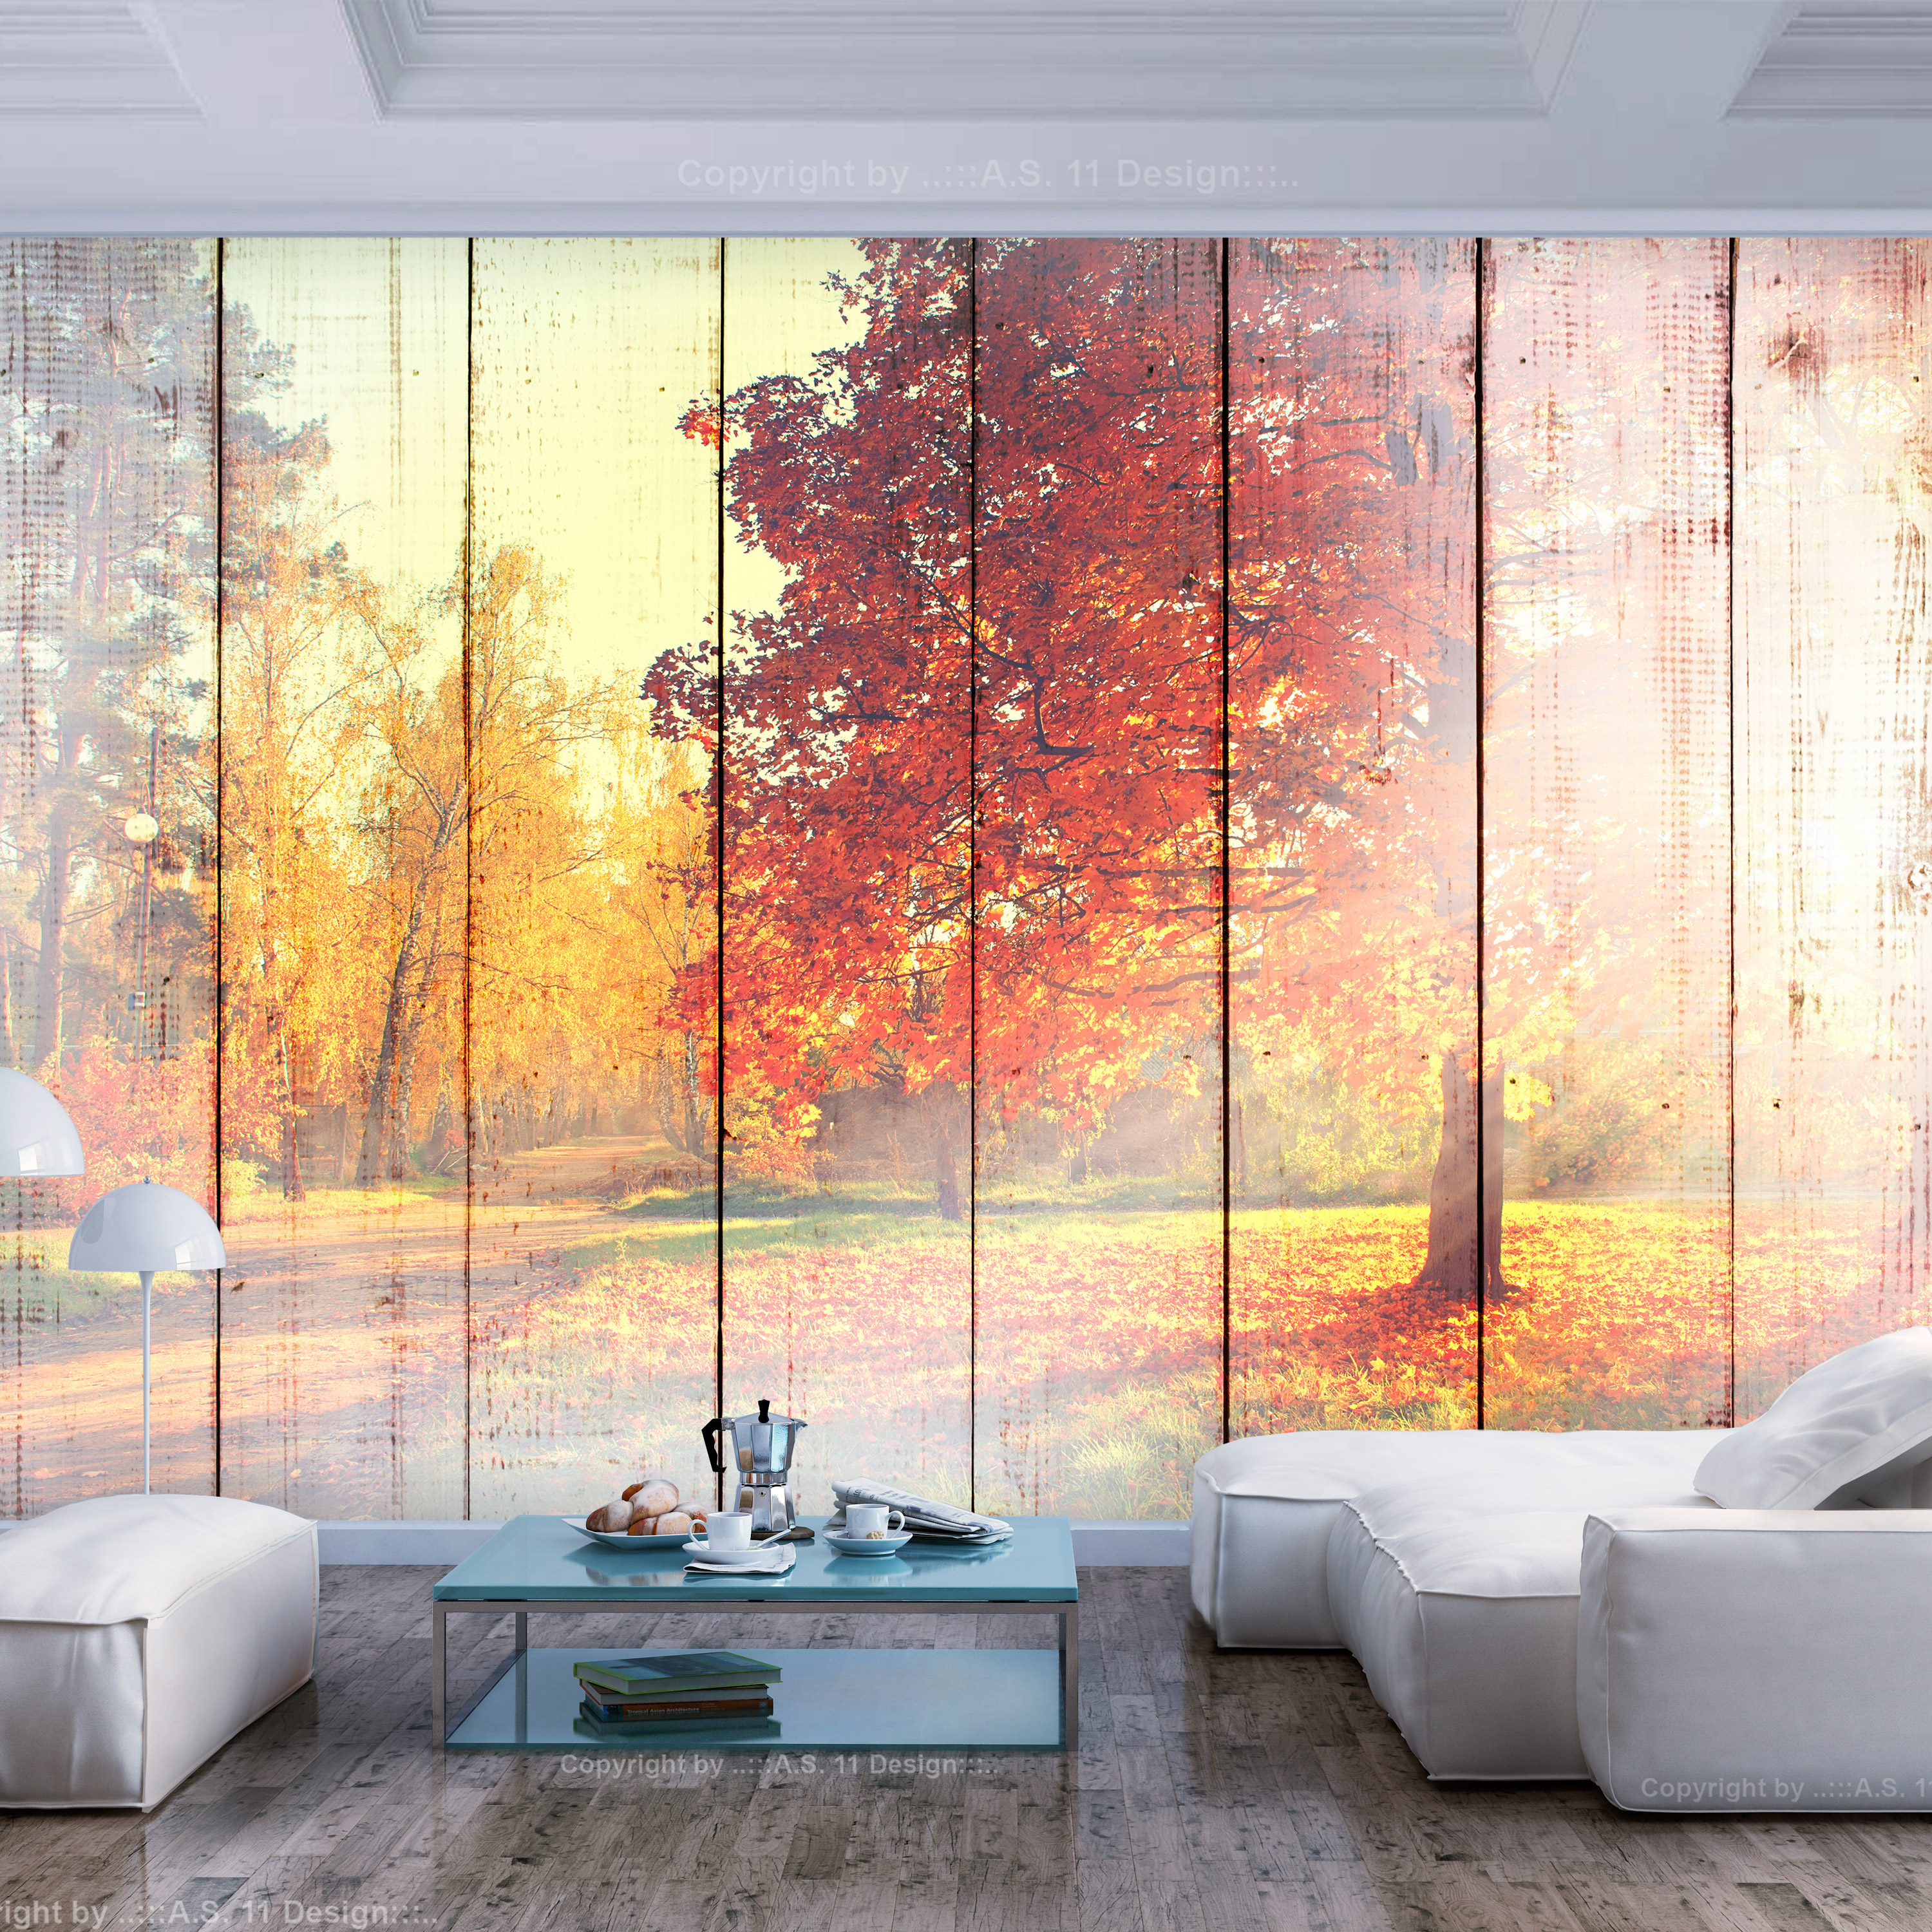 Self-adhesive Wallpaper - Autumn Sun - 98x70